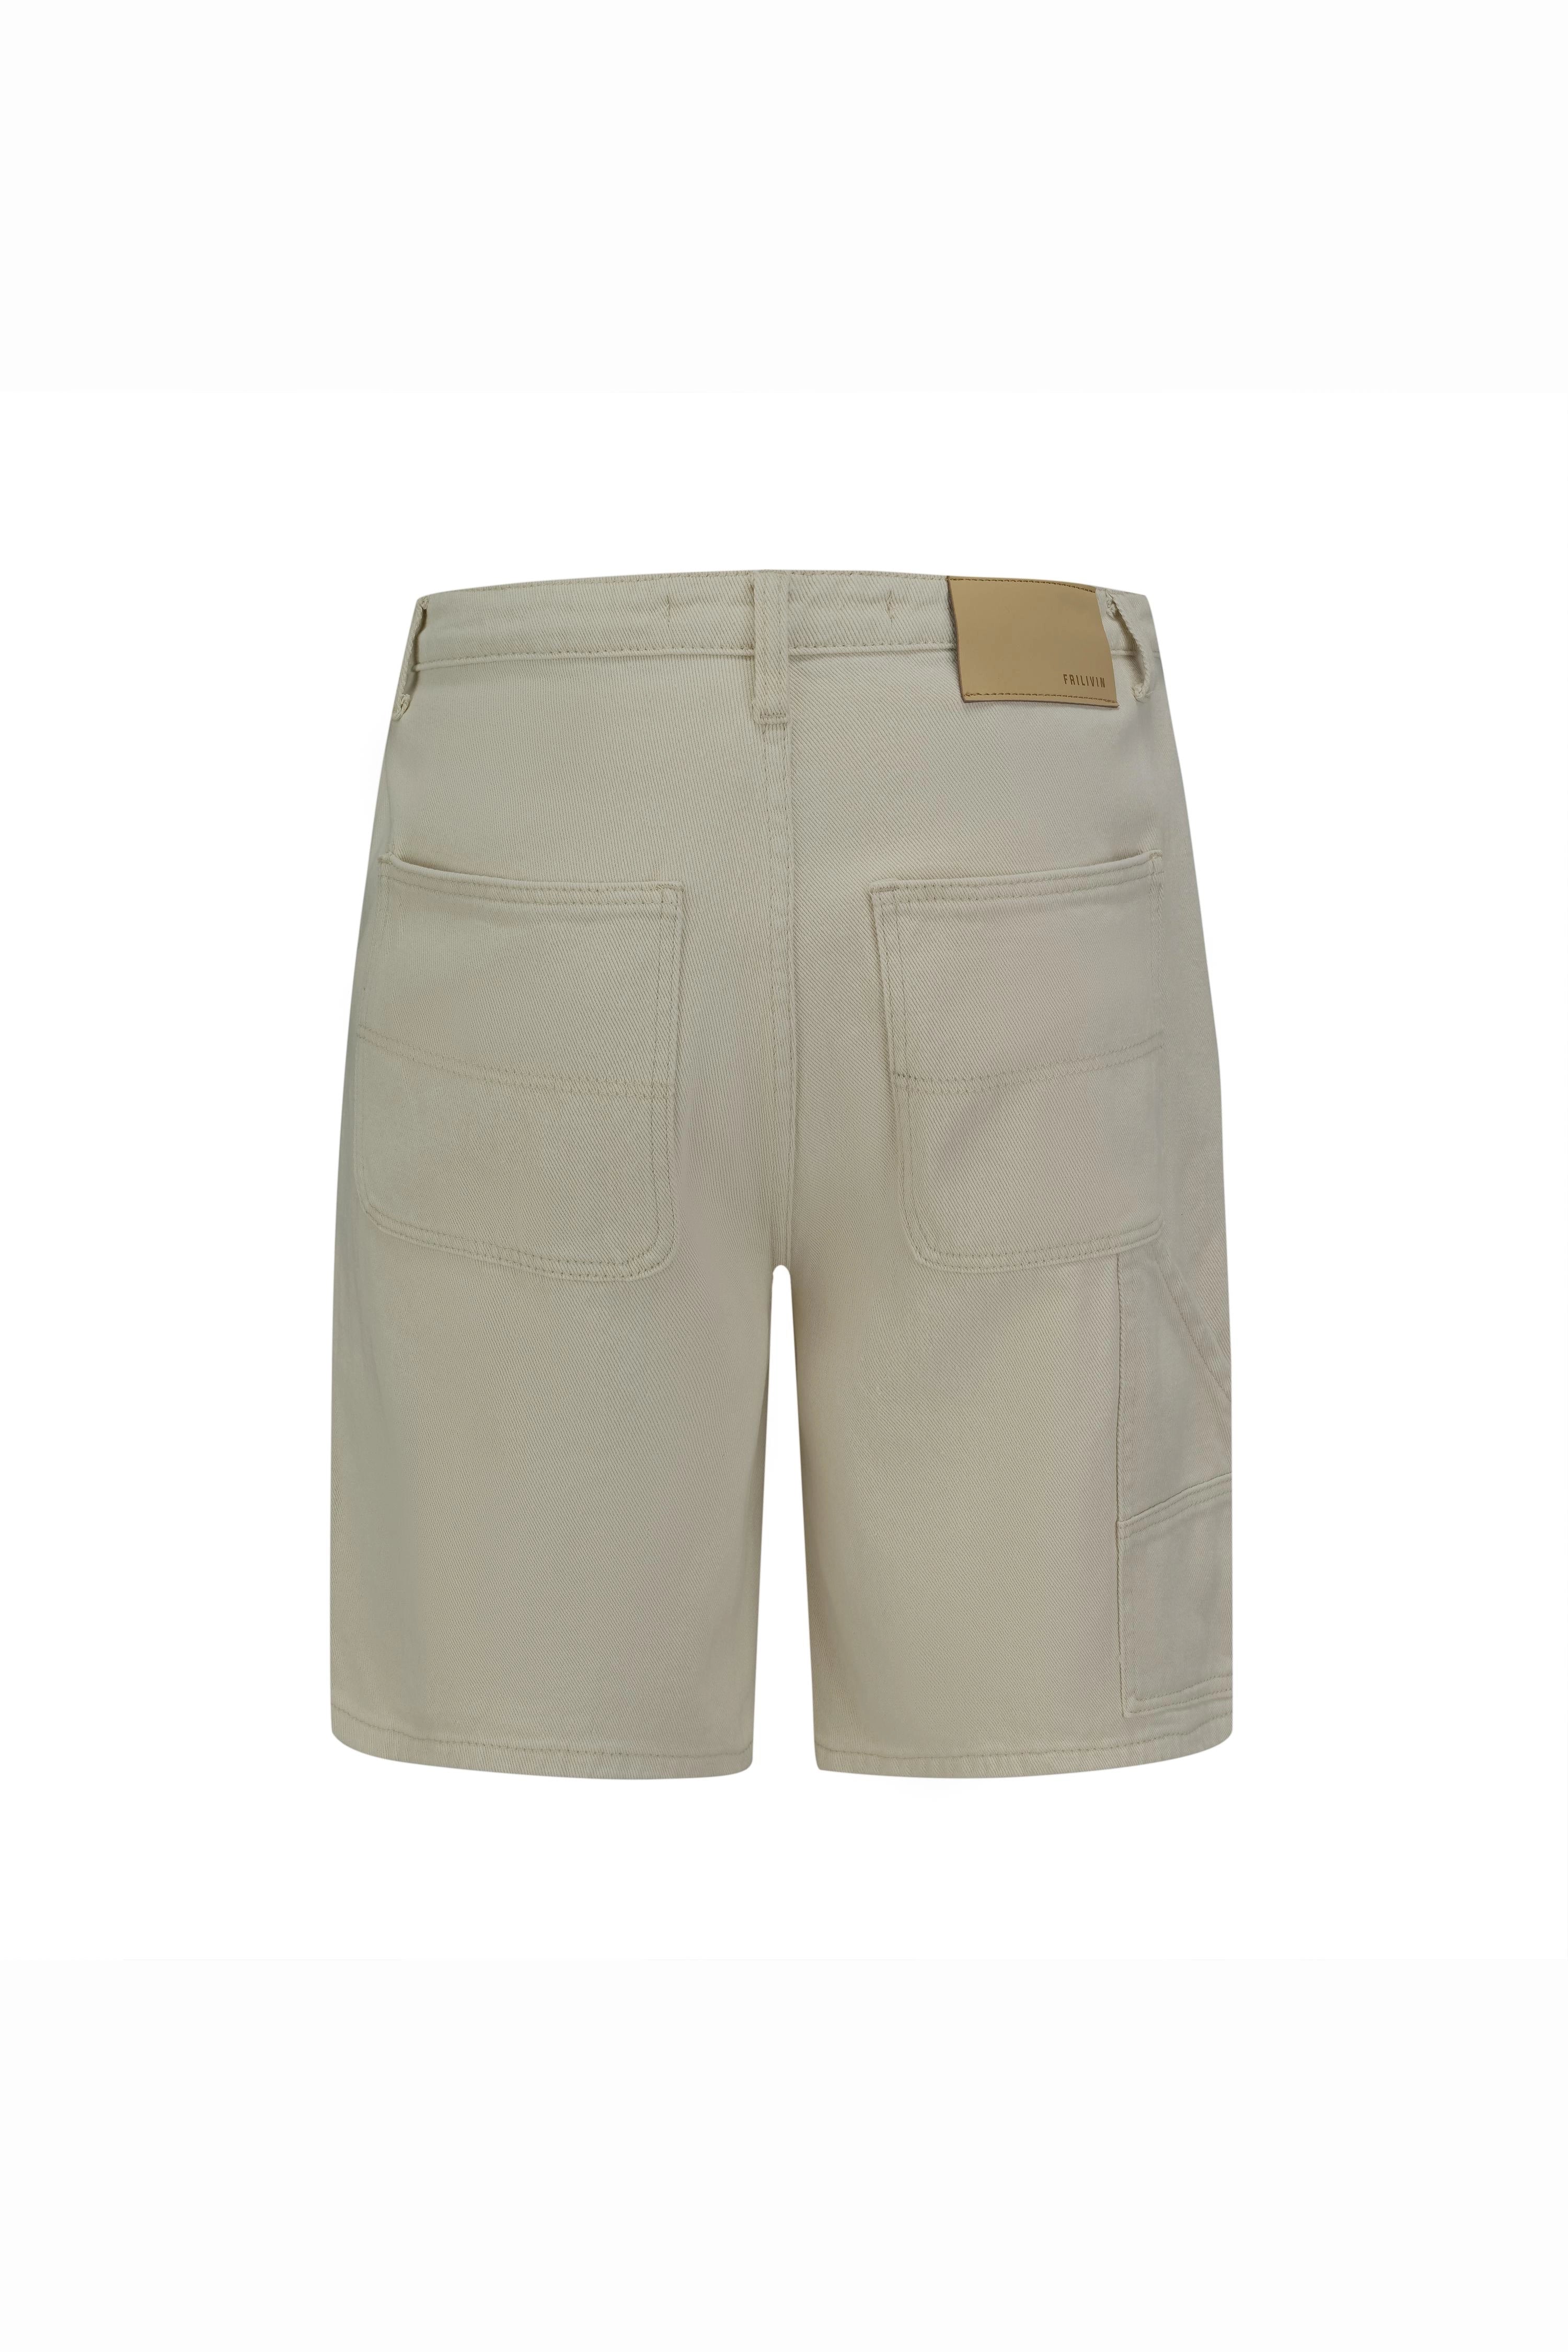 Classic plain wide cut shorts